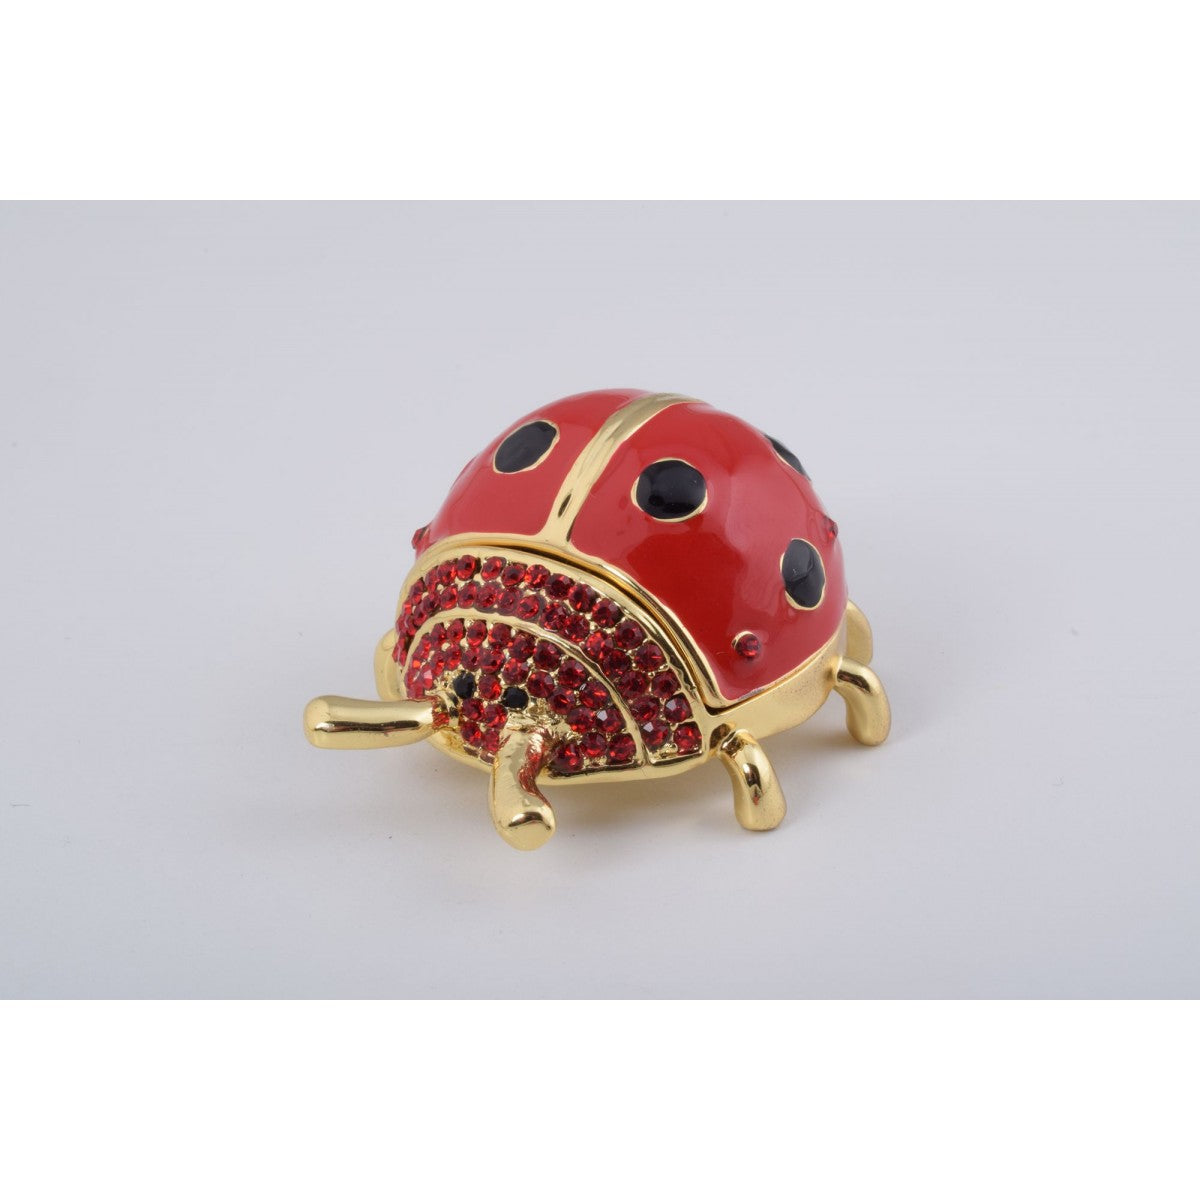 Red Ladybug Trinket Box by Keren Kopal